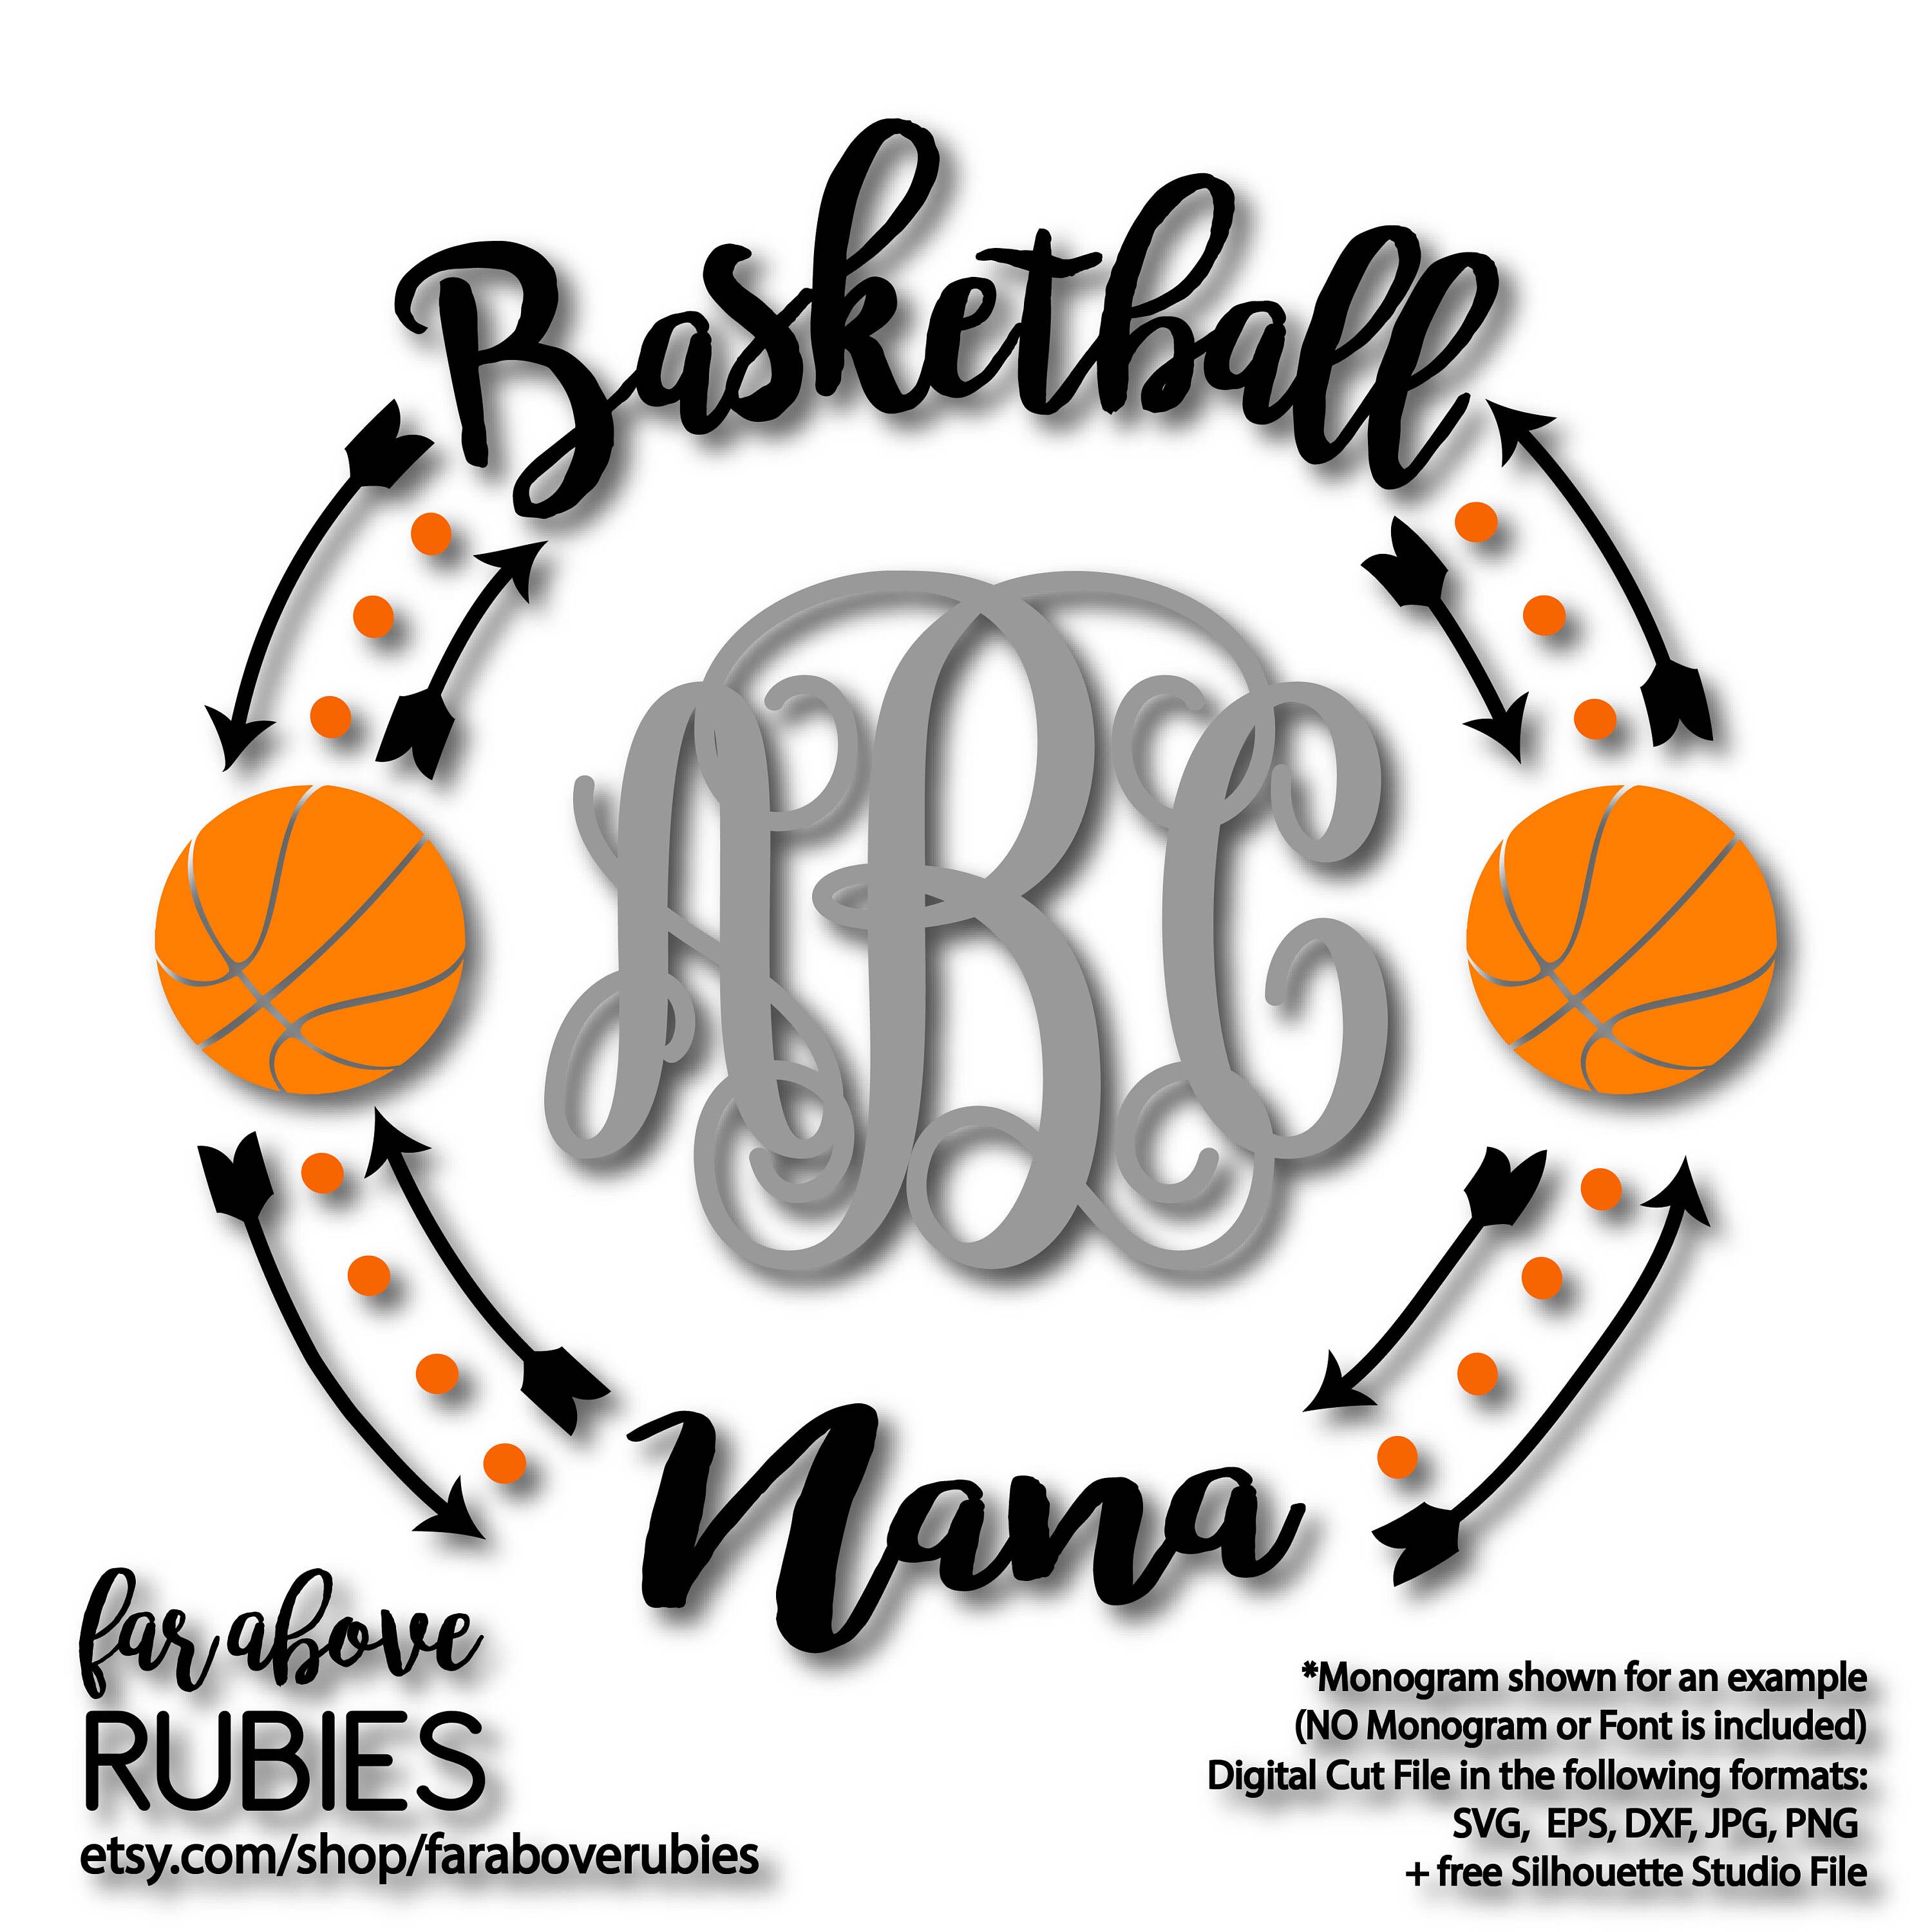 Download Basketball Nana Monogram Wreath Arrows monogram NOT included